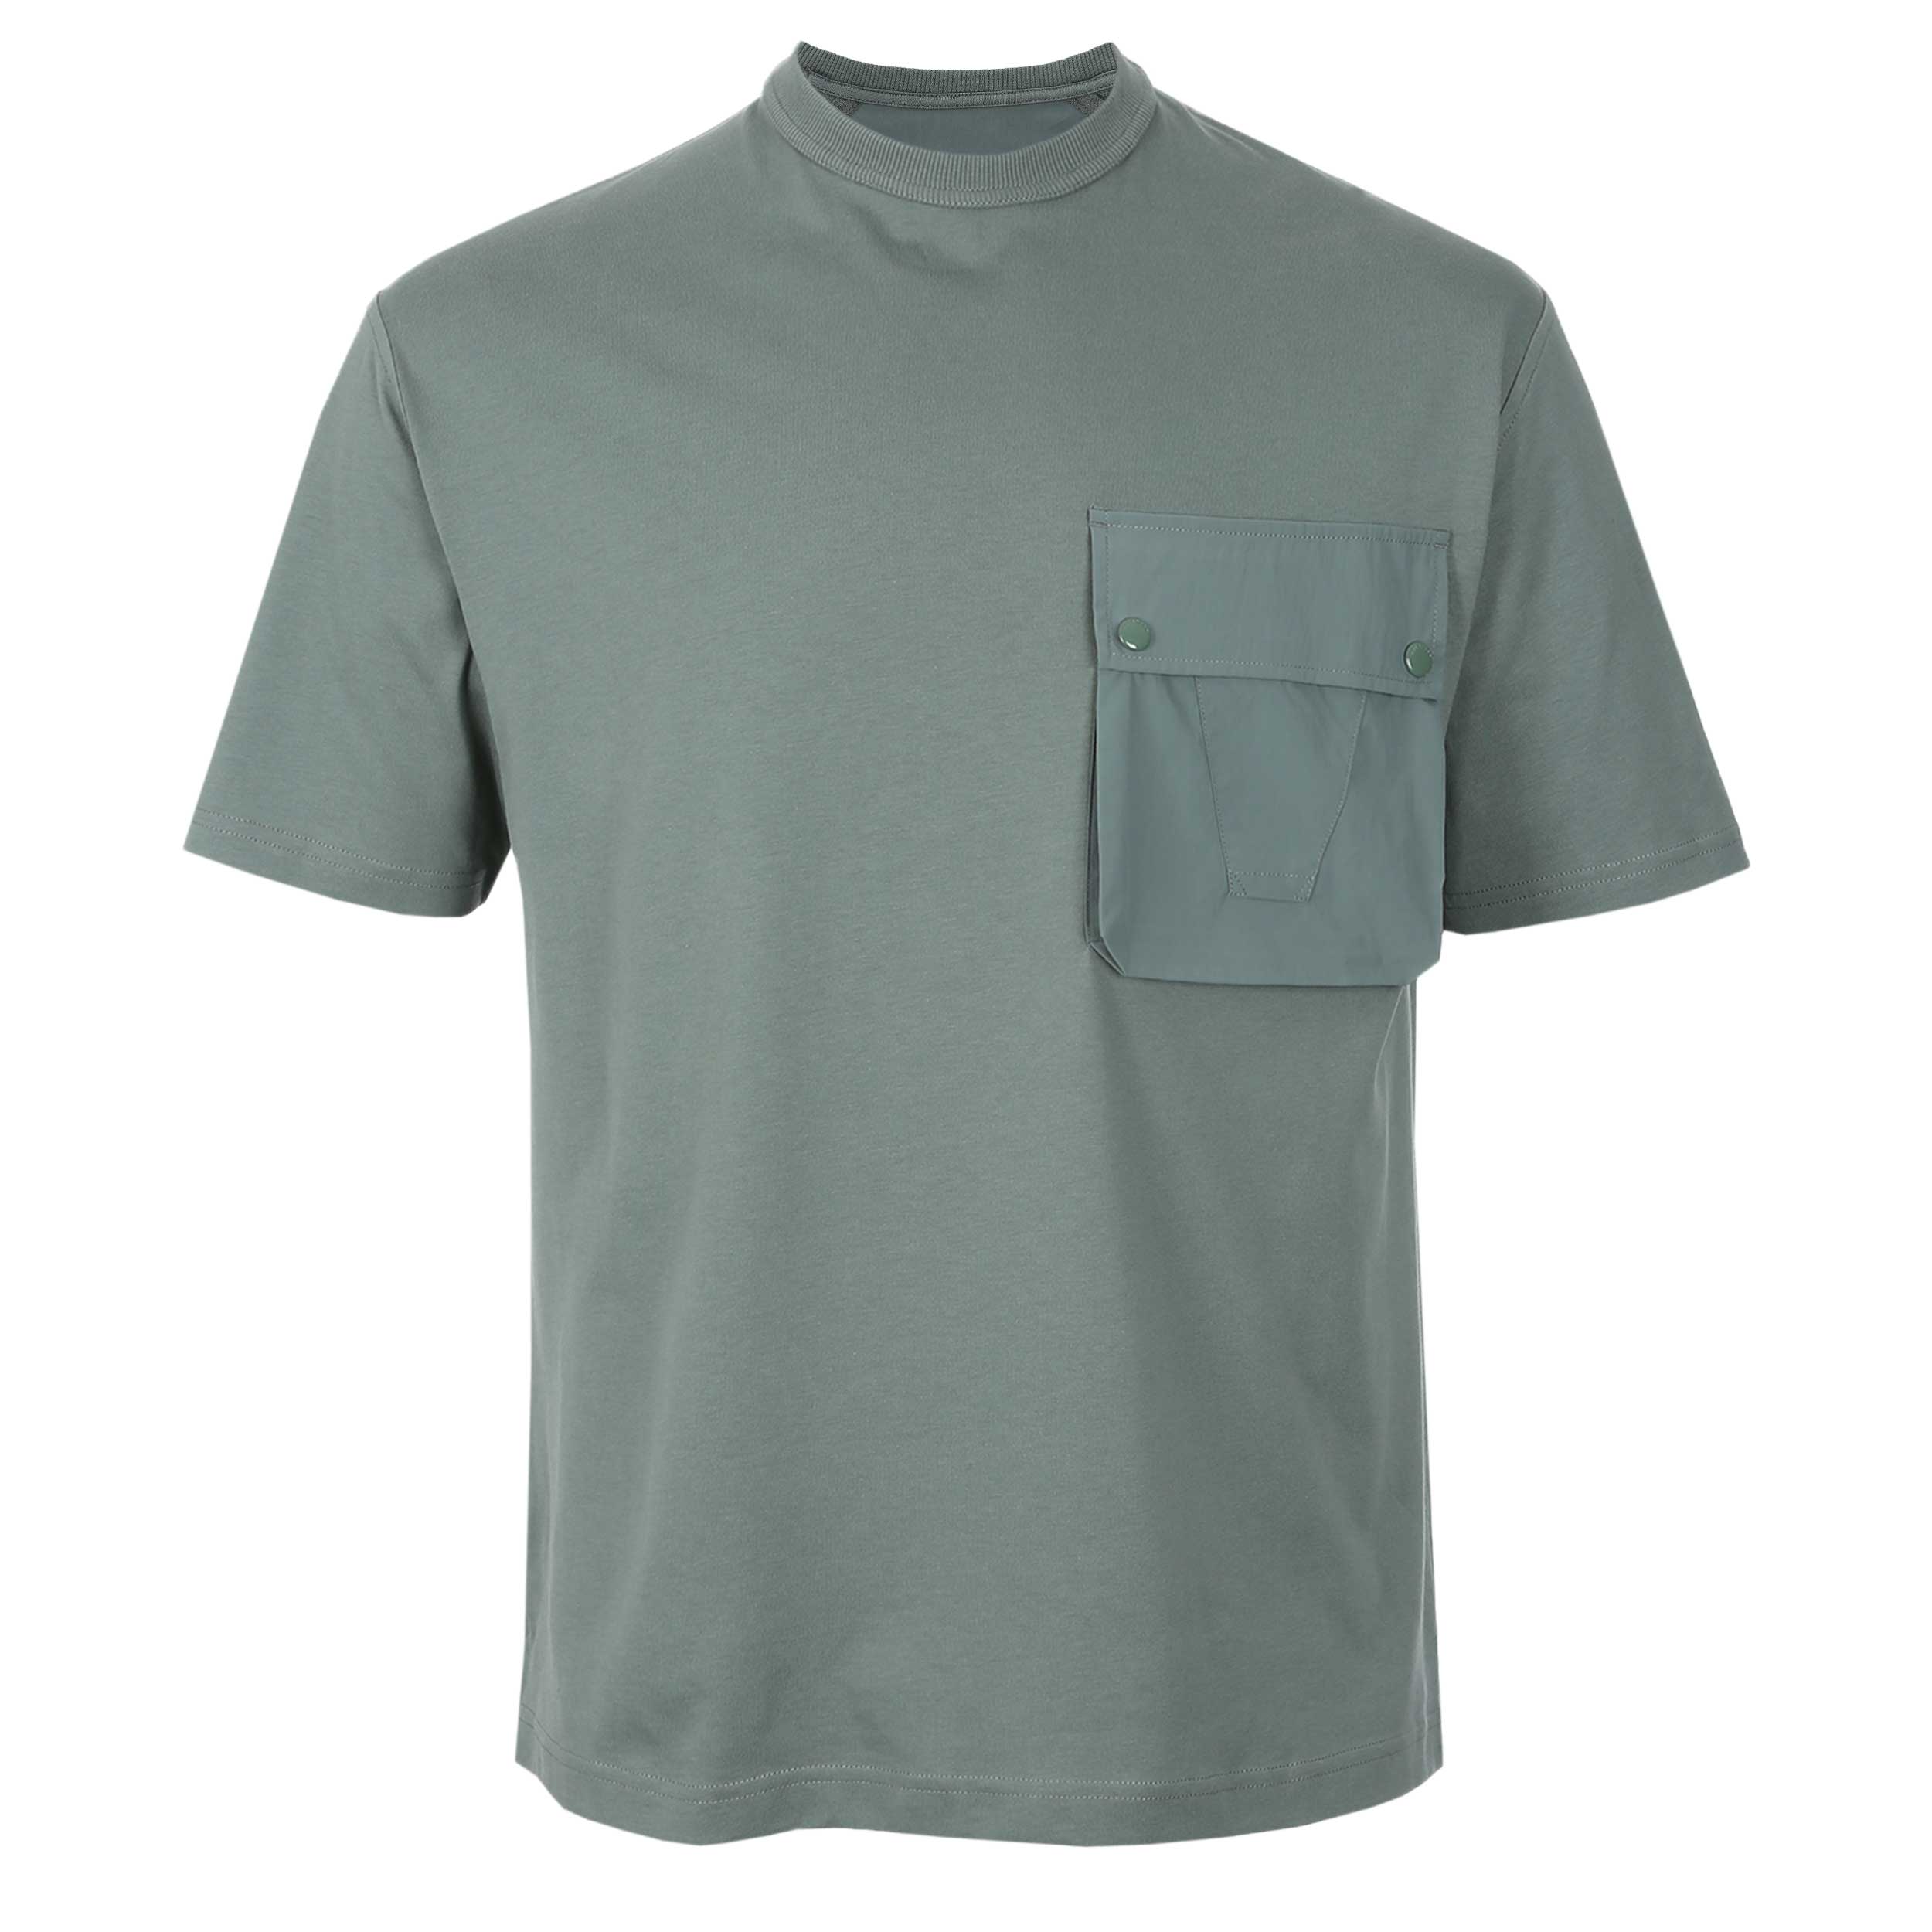 Belstaff Castmaster T-Shirt in Mineral Green